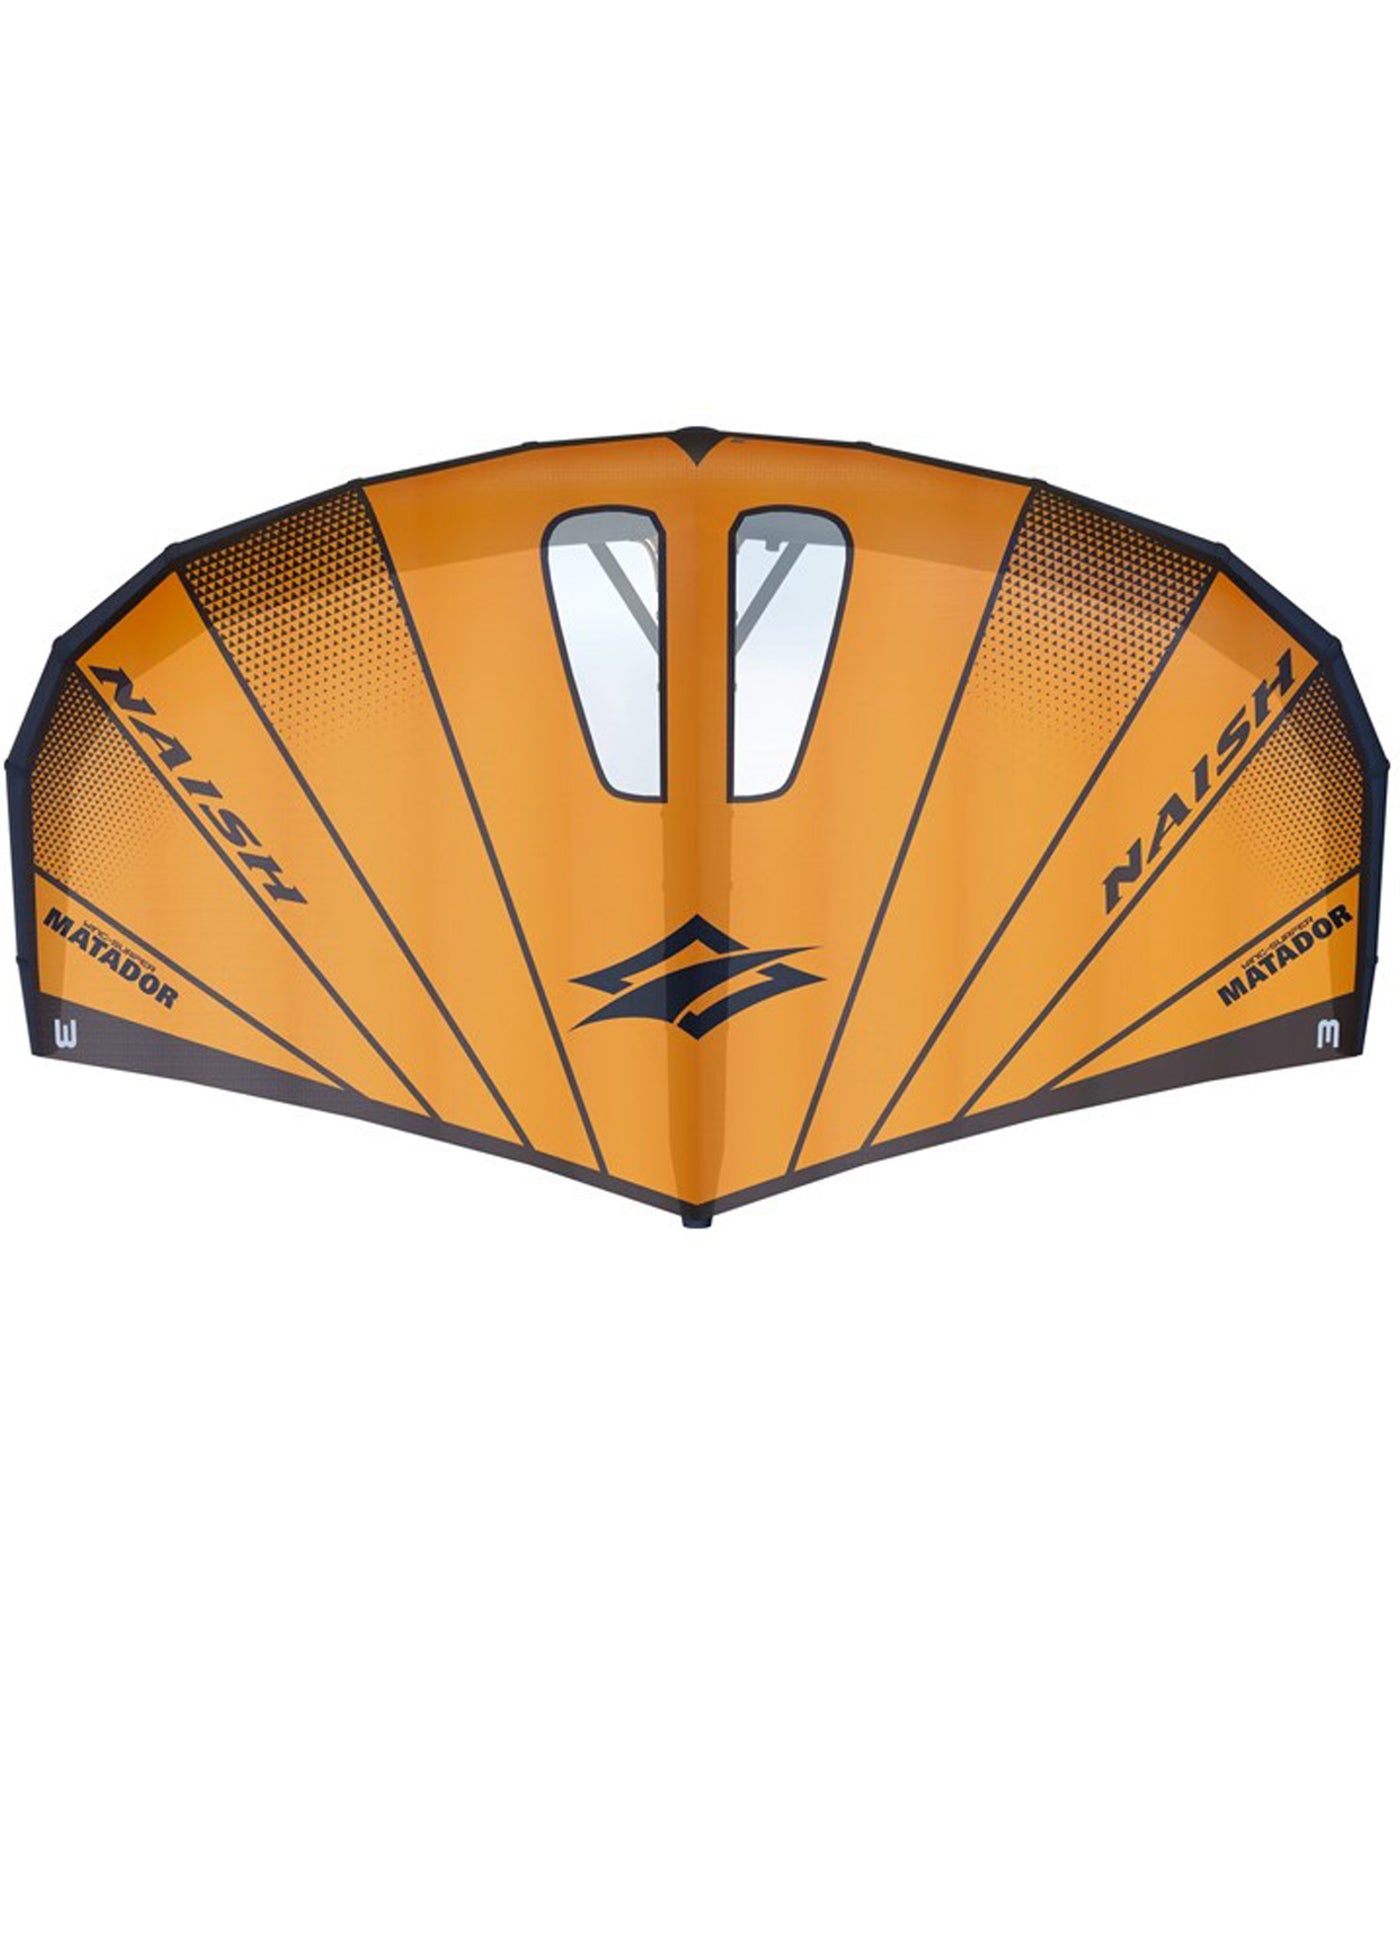 Naish Wing-Surfer Matador LT Wind Wing 3m, 4m ,5m - Alleydesigns  Pty Ltd                                             ABN: 44165571264